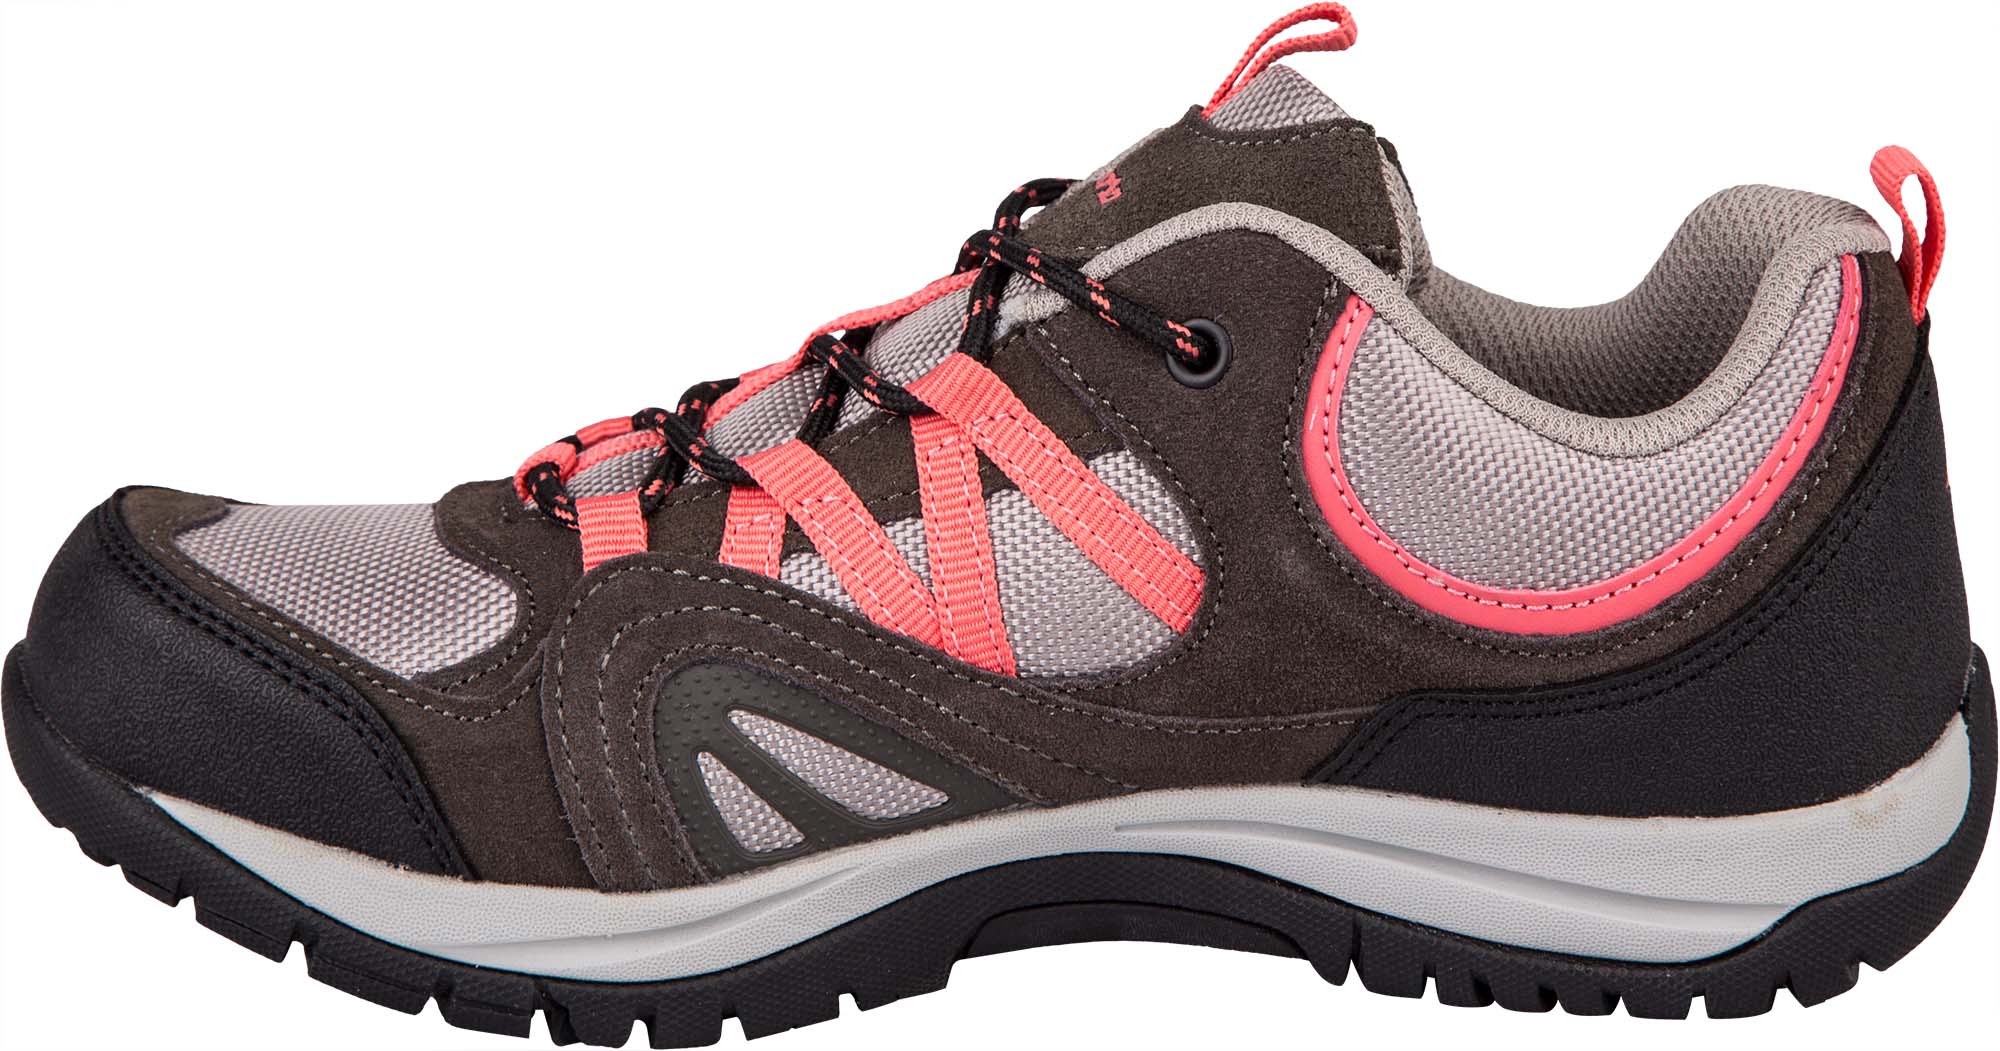 Women's trekking shoes